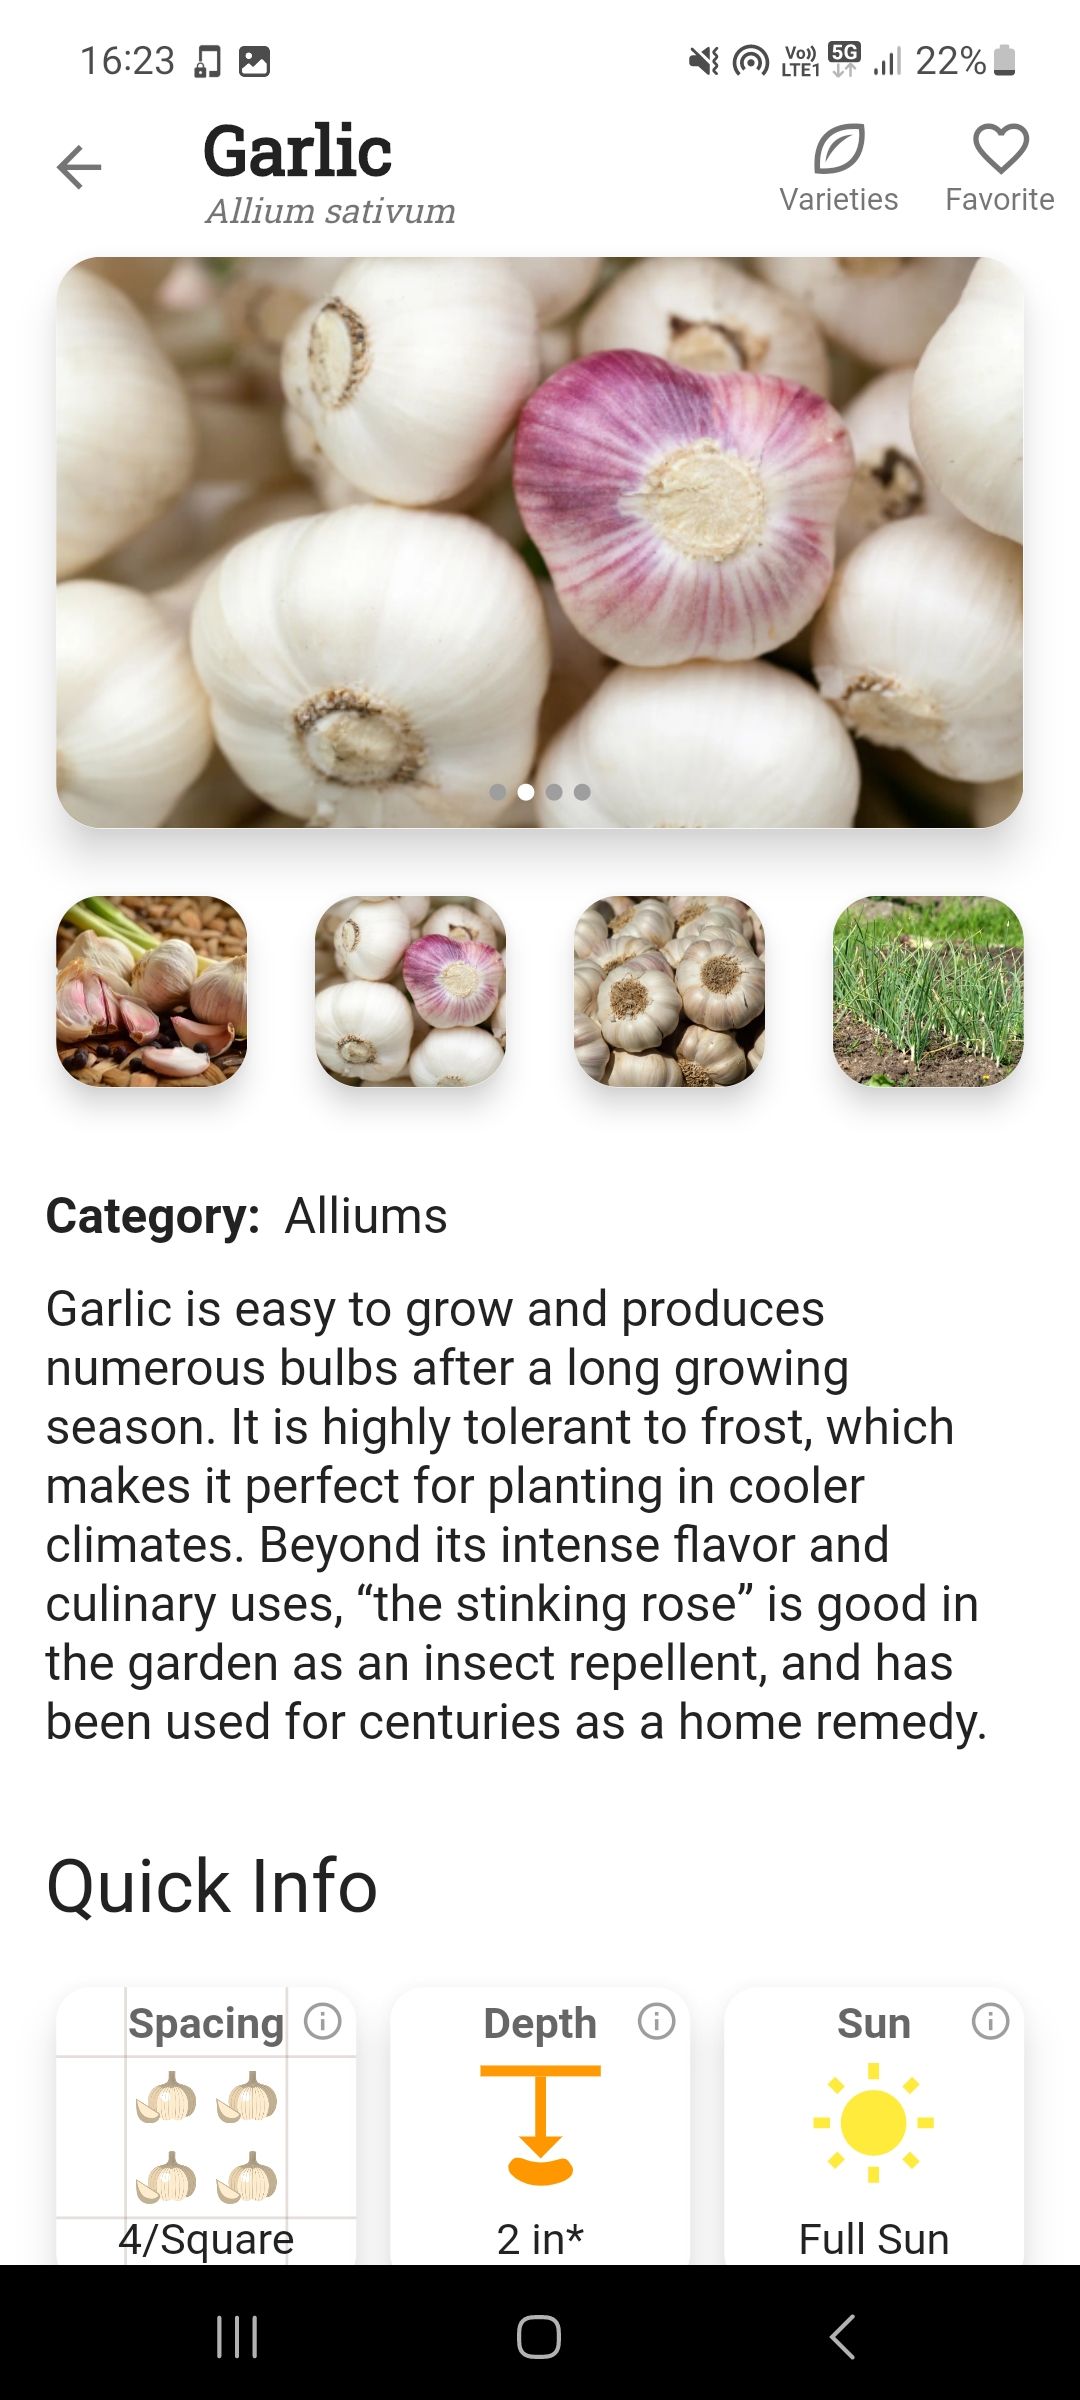 Garlic Information Page in Planter app